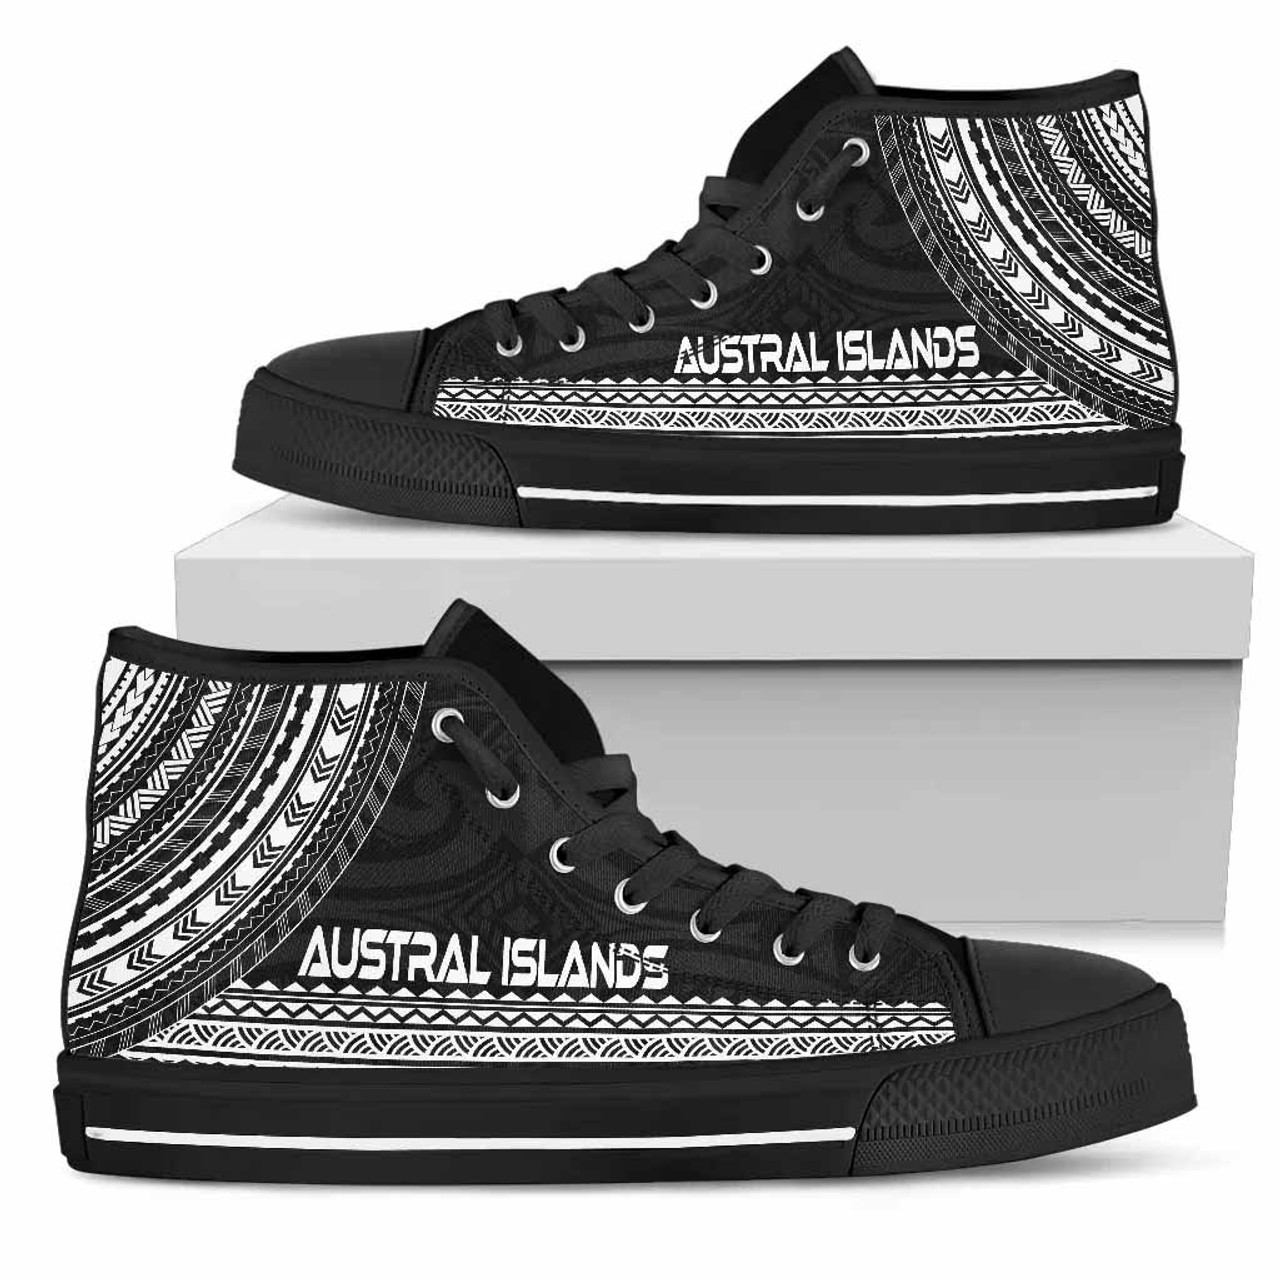 Austral Islands High Top Shoes - Polynesian Black Chief Version 2